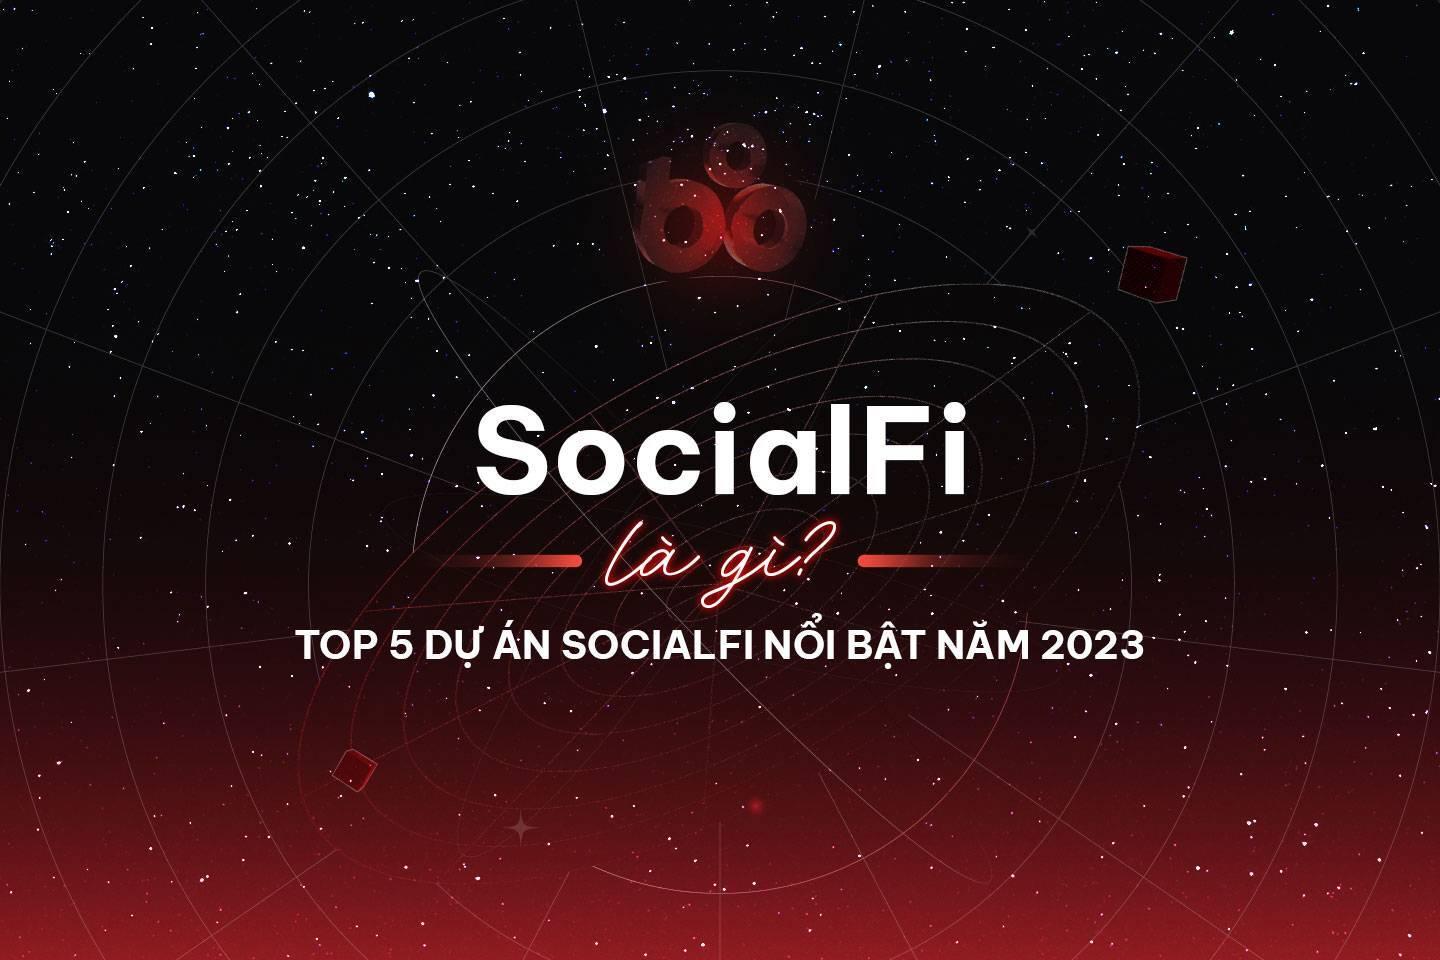 socialfi-la-gi-top-5-du-an-socialfi-noi-bat-nhat-nam-2023